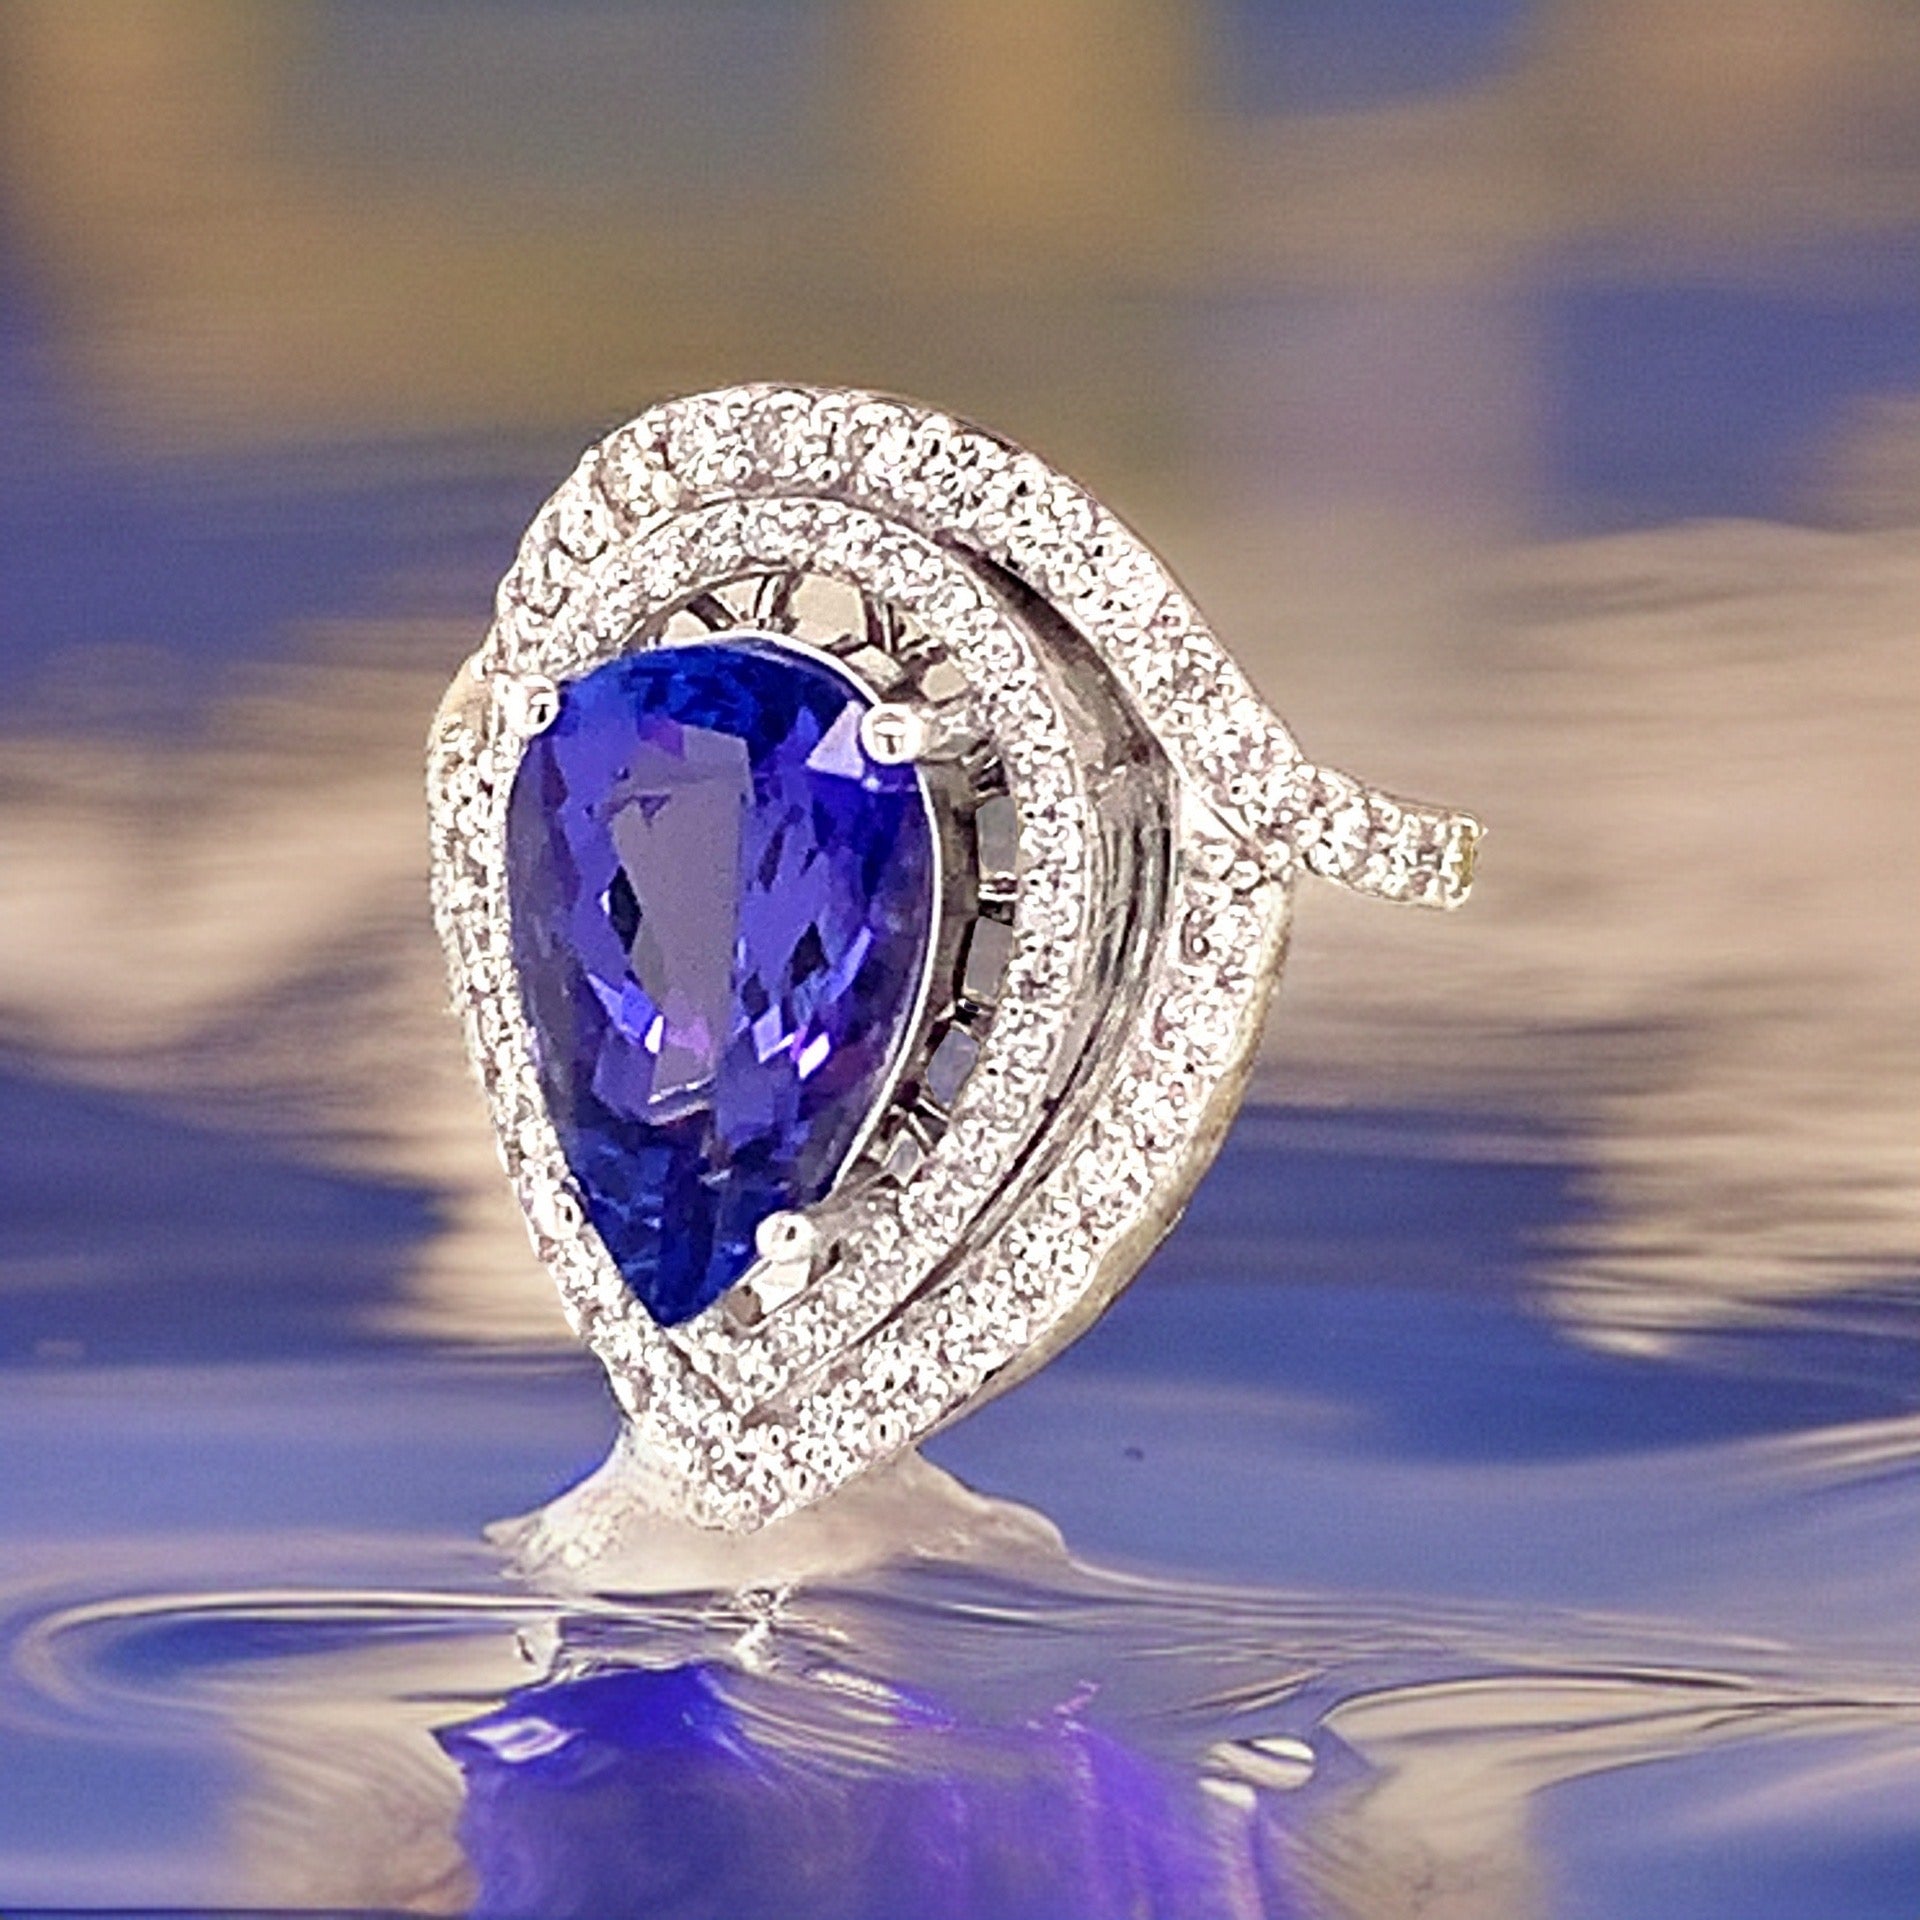 Natural Tanzanite Diamond Ring 14k Gold 4.54 TCW GIA Certified $5,950 111877 - Certified Fine Jewelry